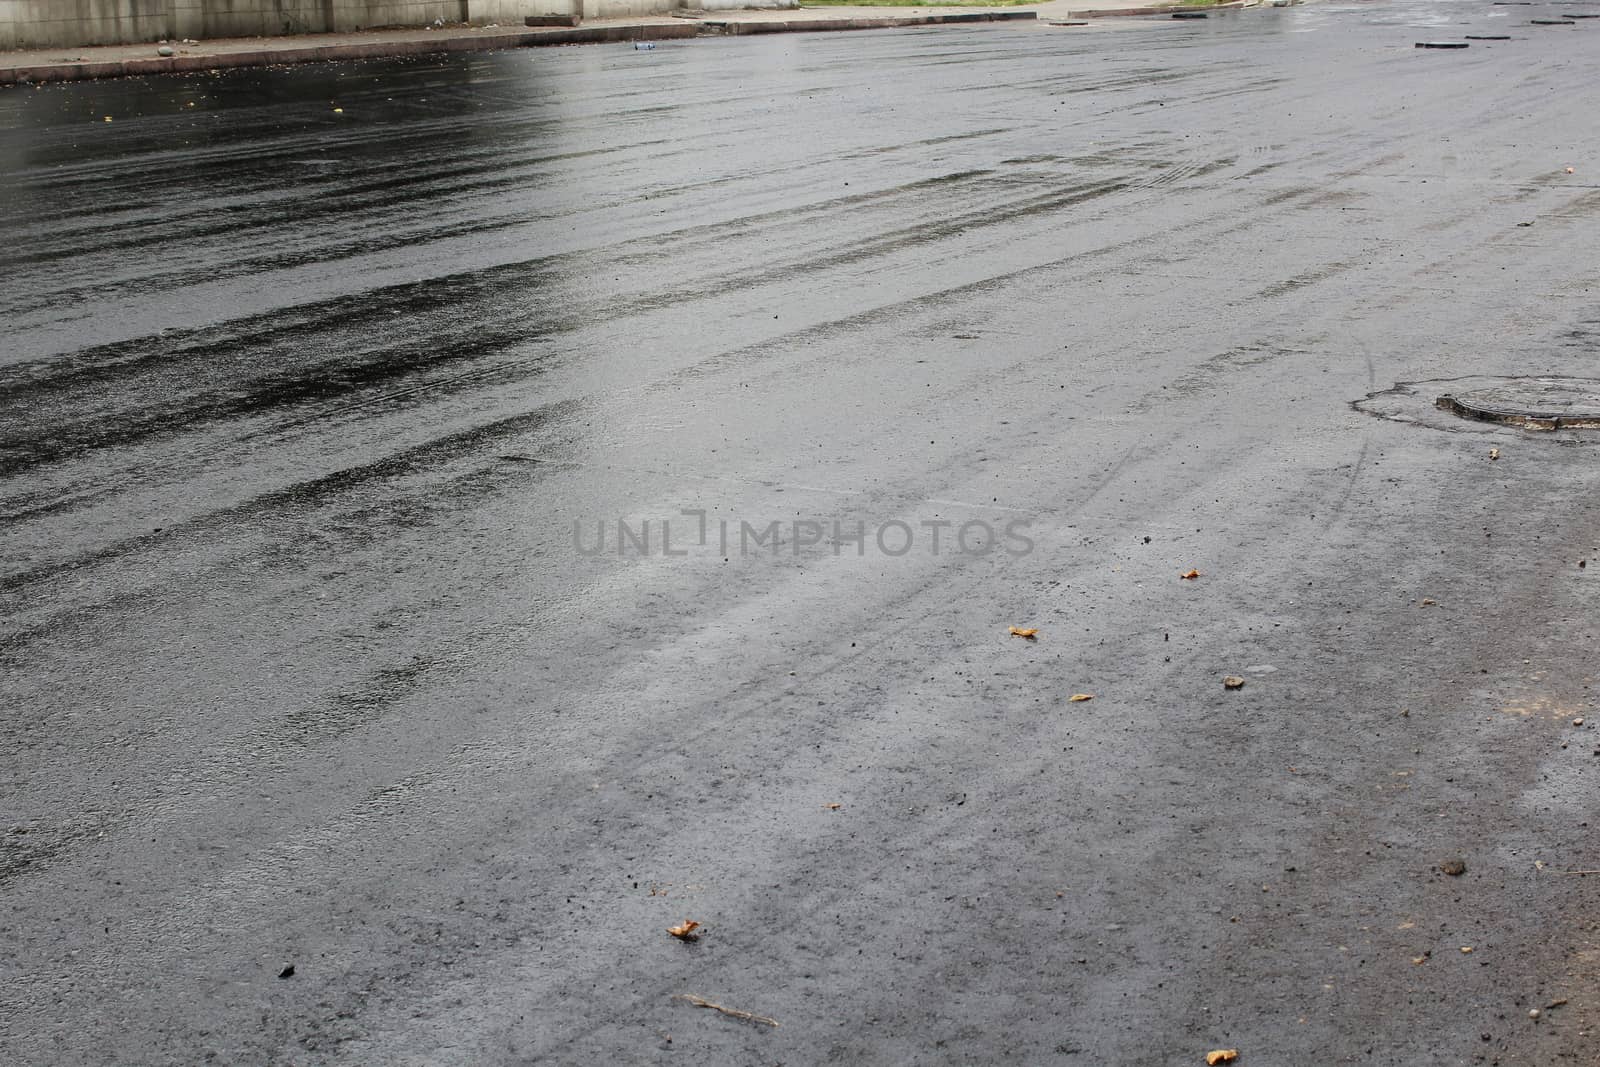 Freshly laid black tar asphalt pavement - a new road surface made of bitumen.